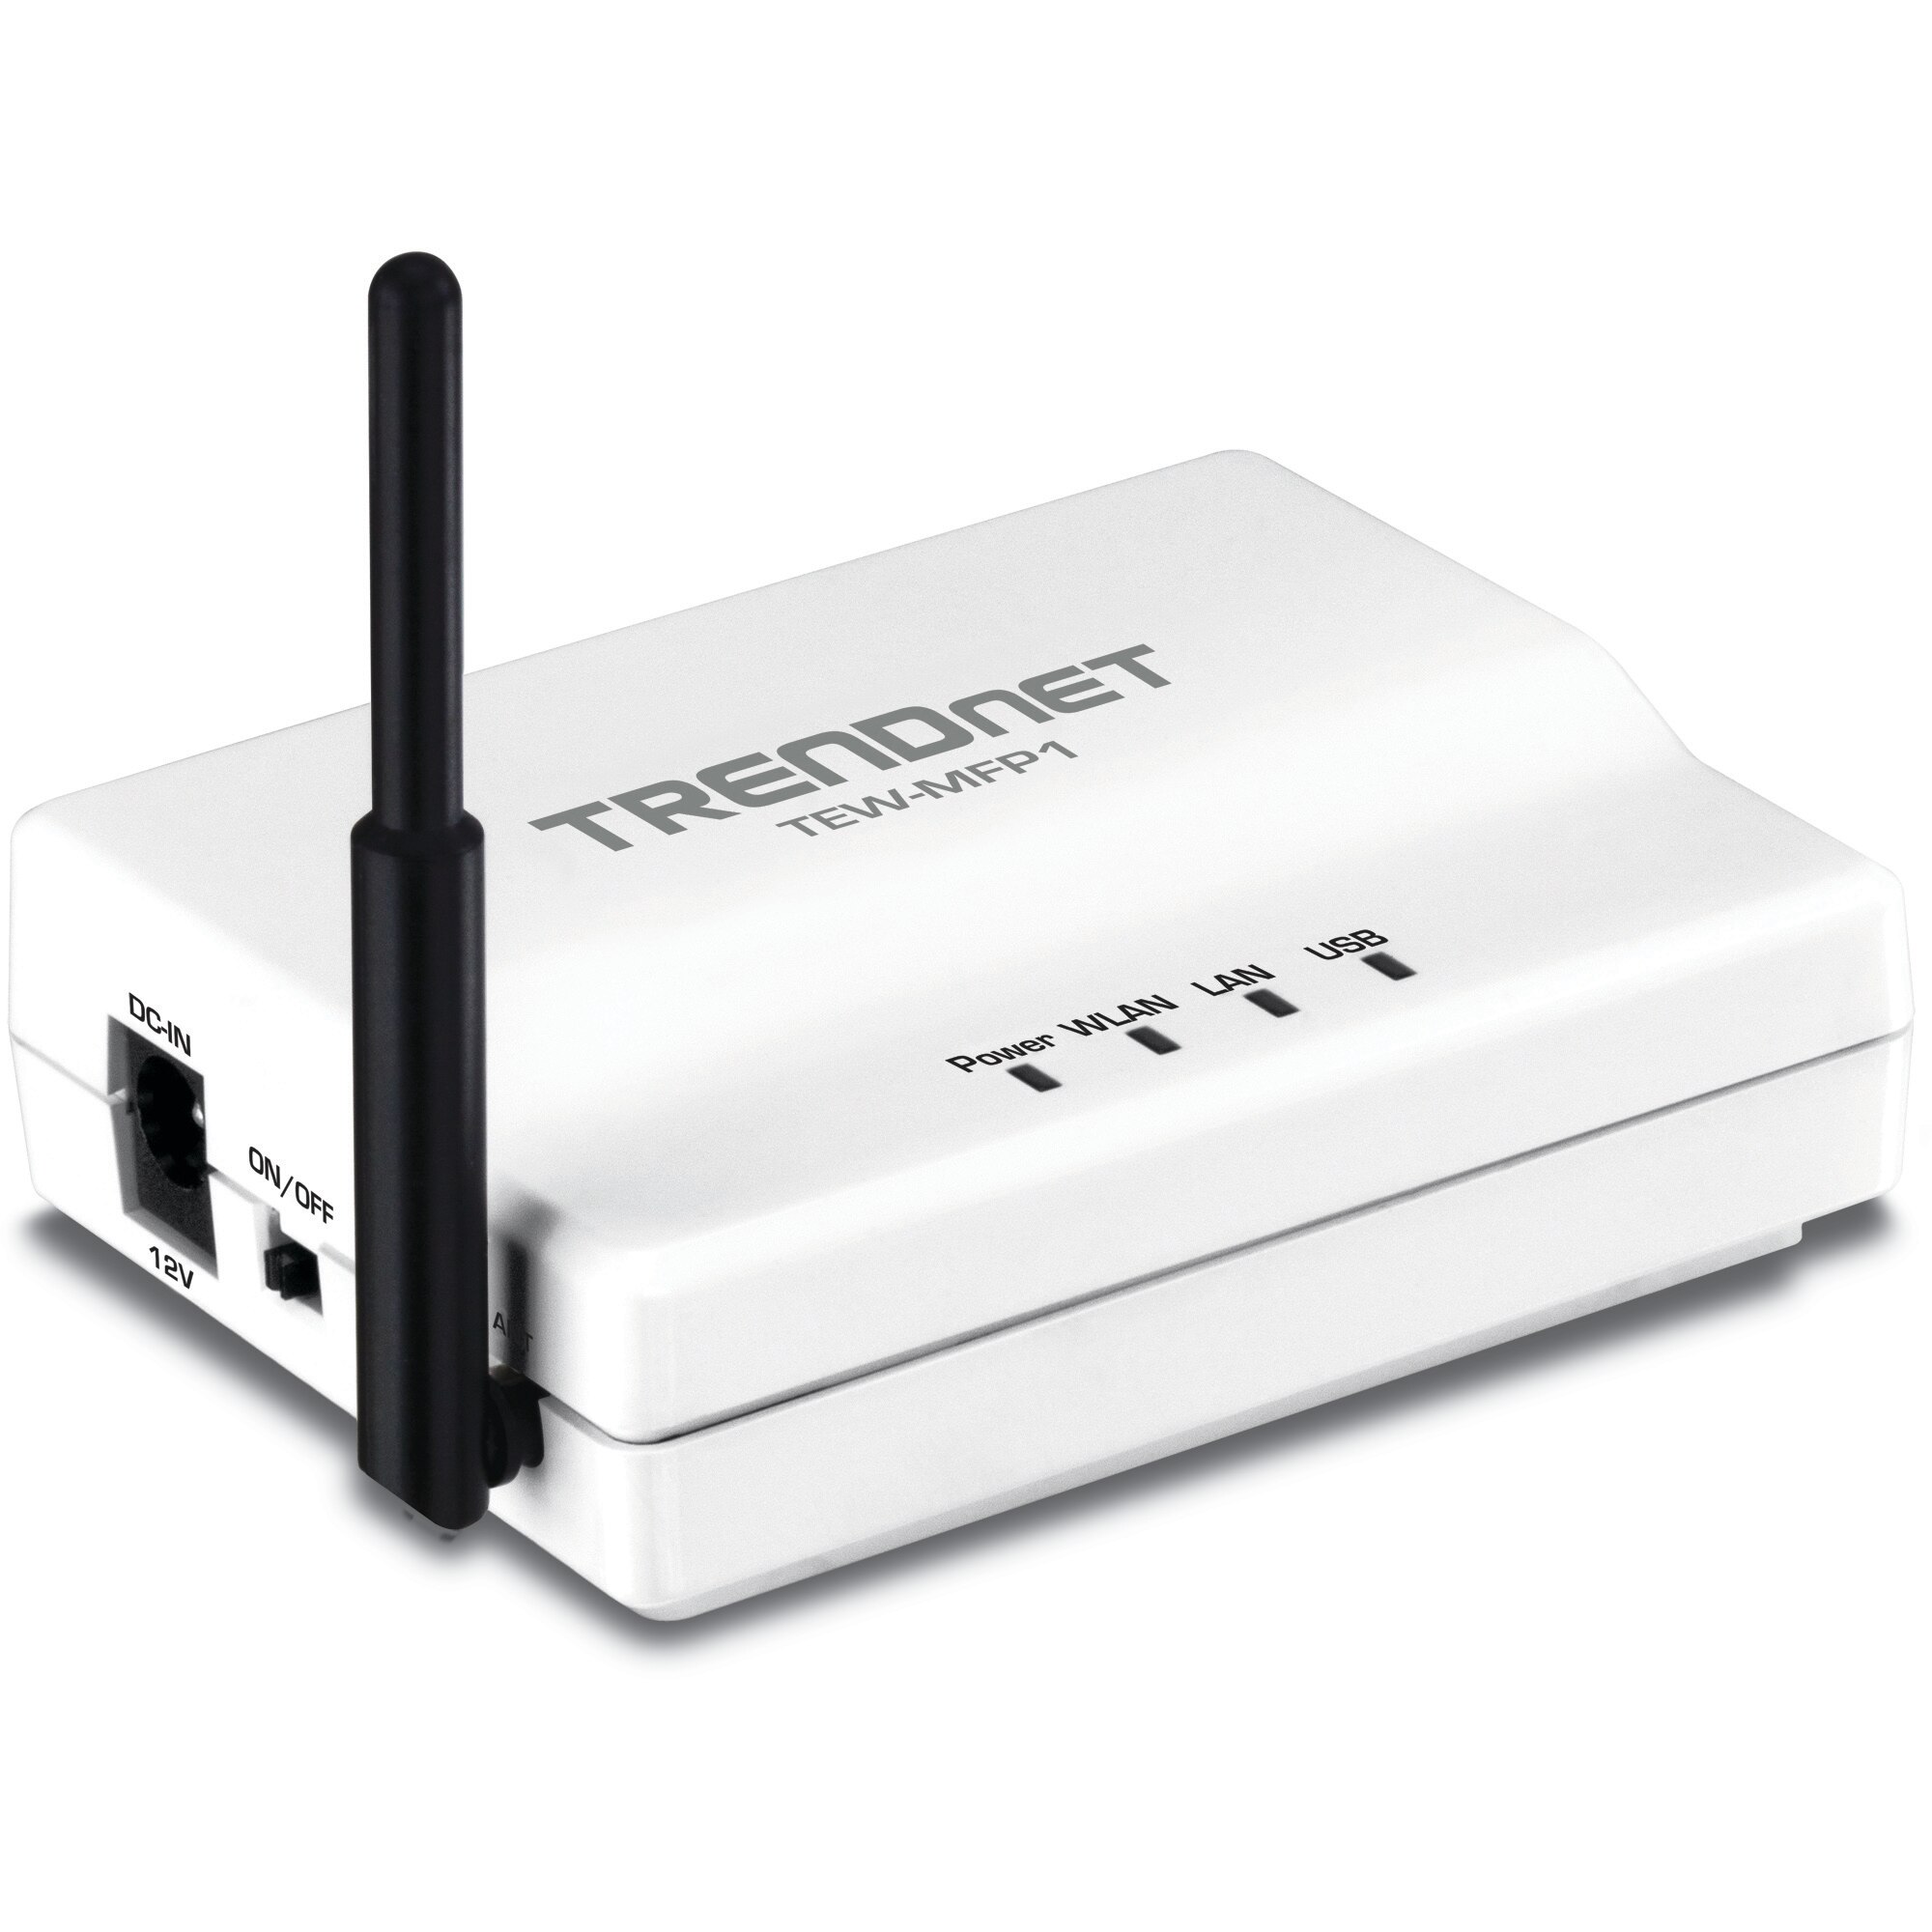 Принтер сервер купить. Принт сервер Wi-Fi. Принт-сервер TRENDNET TEW-mp1u / 1utp, 10/100mbps, USB2.0, 802.11B/G/. Принт-сервер TP-link Wi-Fi. Принтер сервер 10 USB Port.